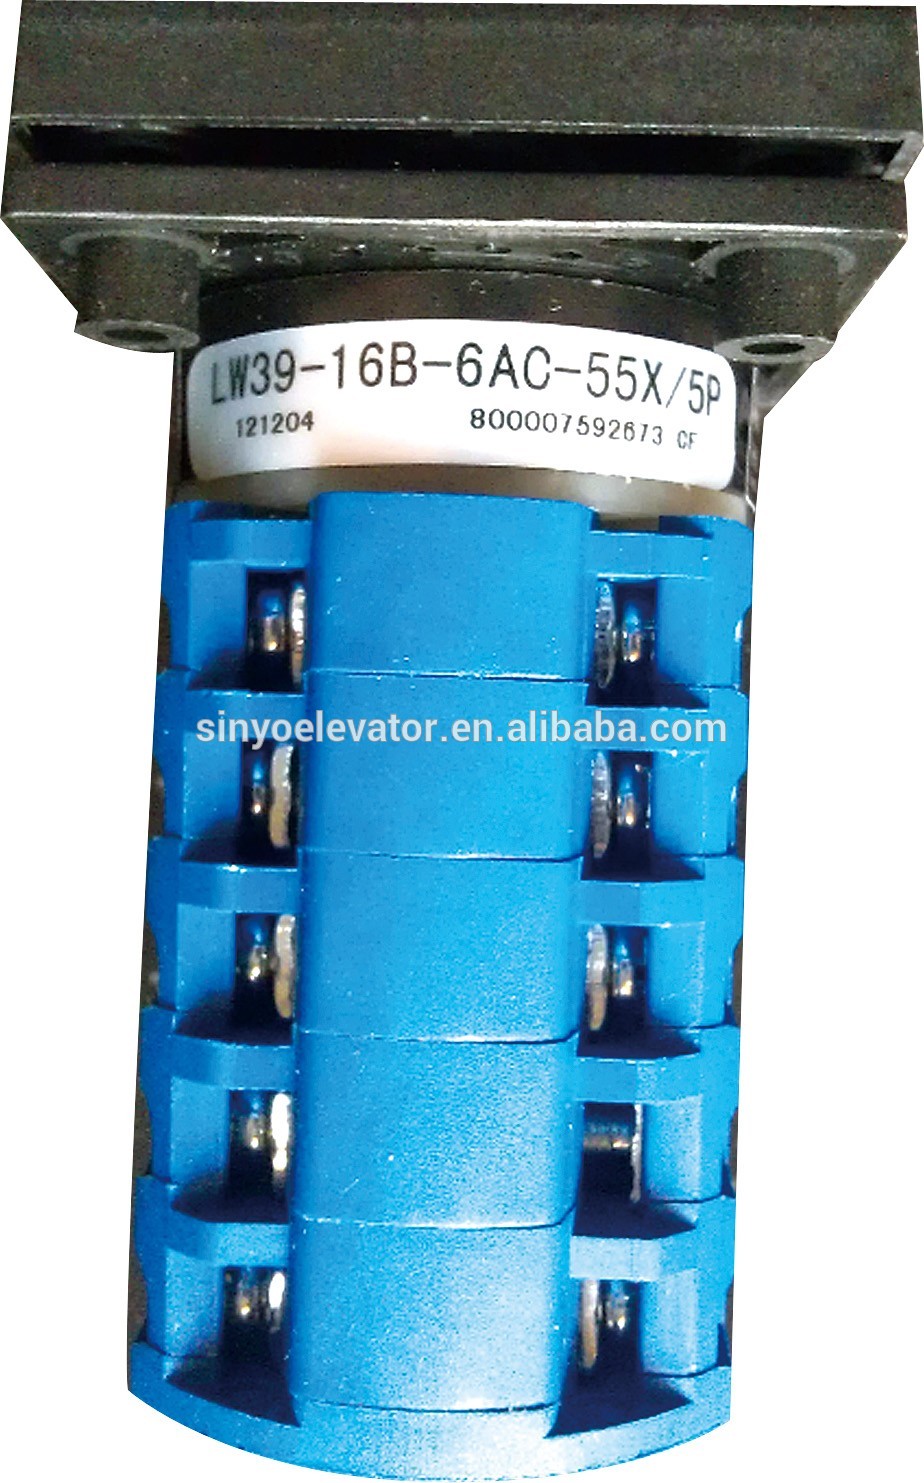 Elevator parts,elevator Inspection Switch LW39-16B-6AC-55X/5P